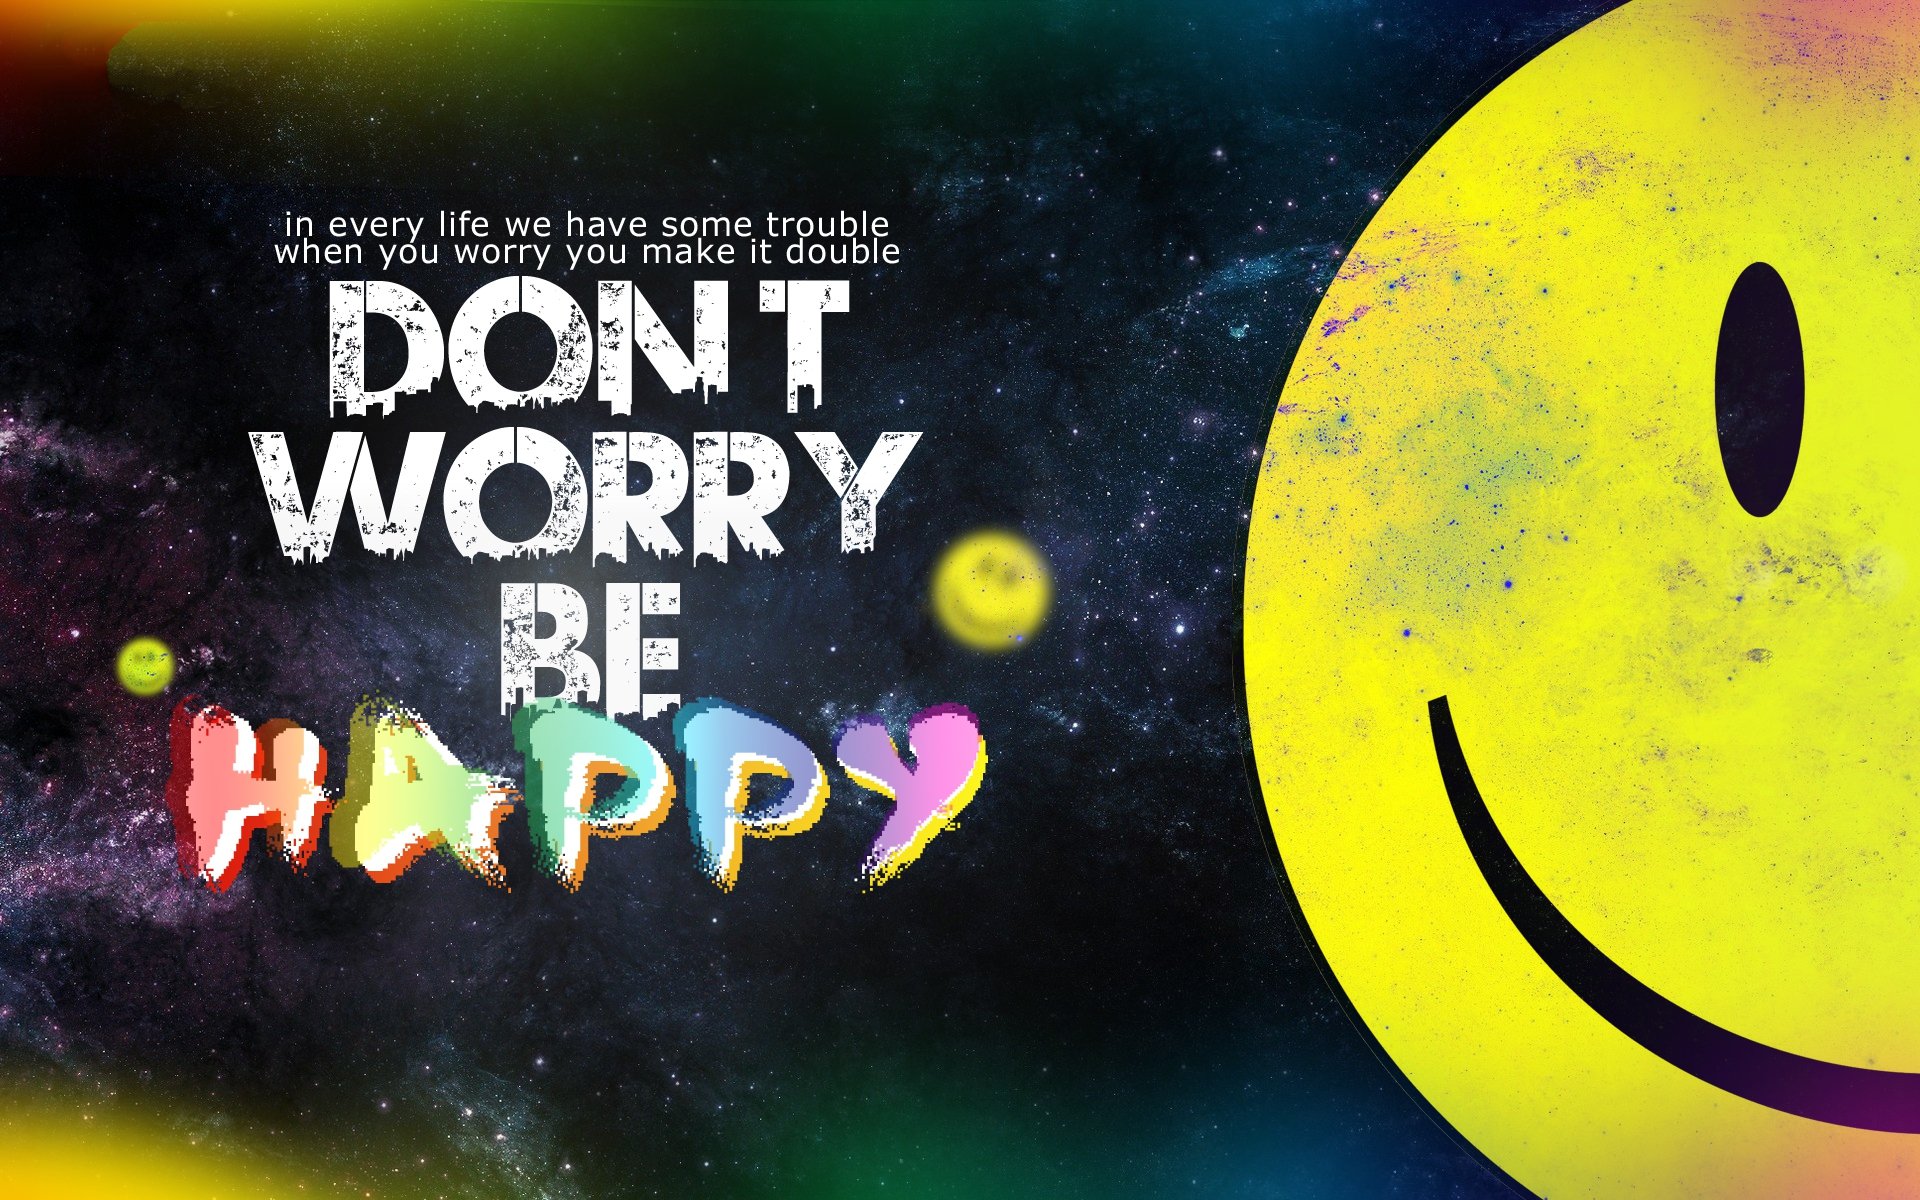 Включи be happy. Don't worry be Happy. Донт вори би Хэппи. Надпись don't worry be Happy. Надпись донт вори би Хэппи.